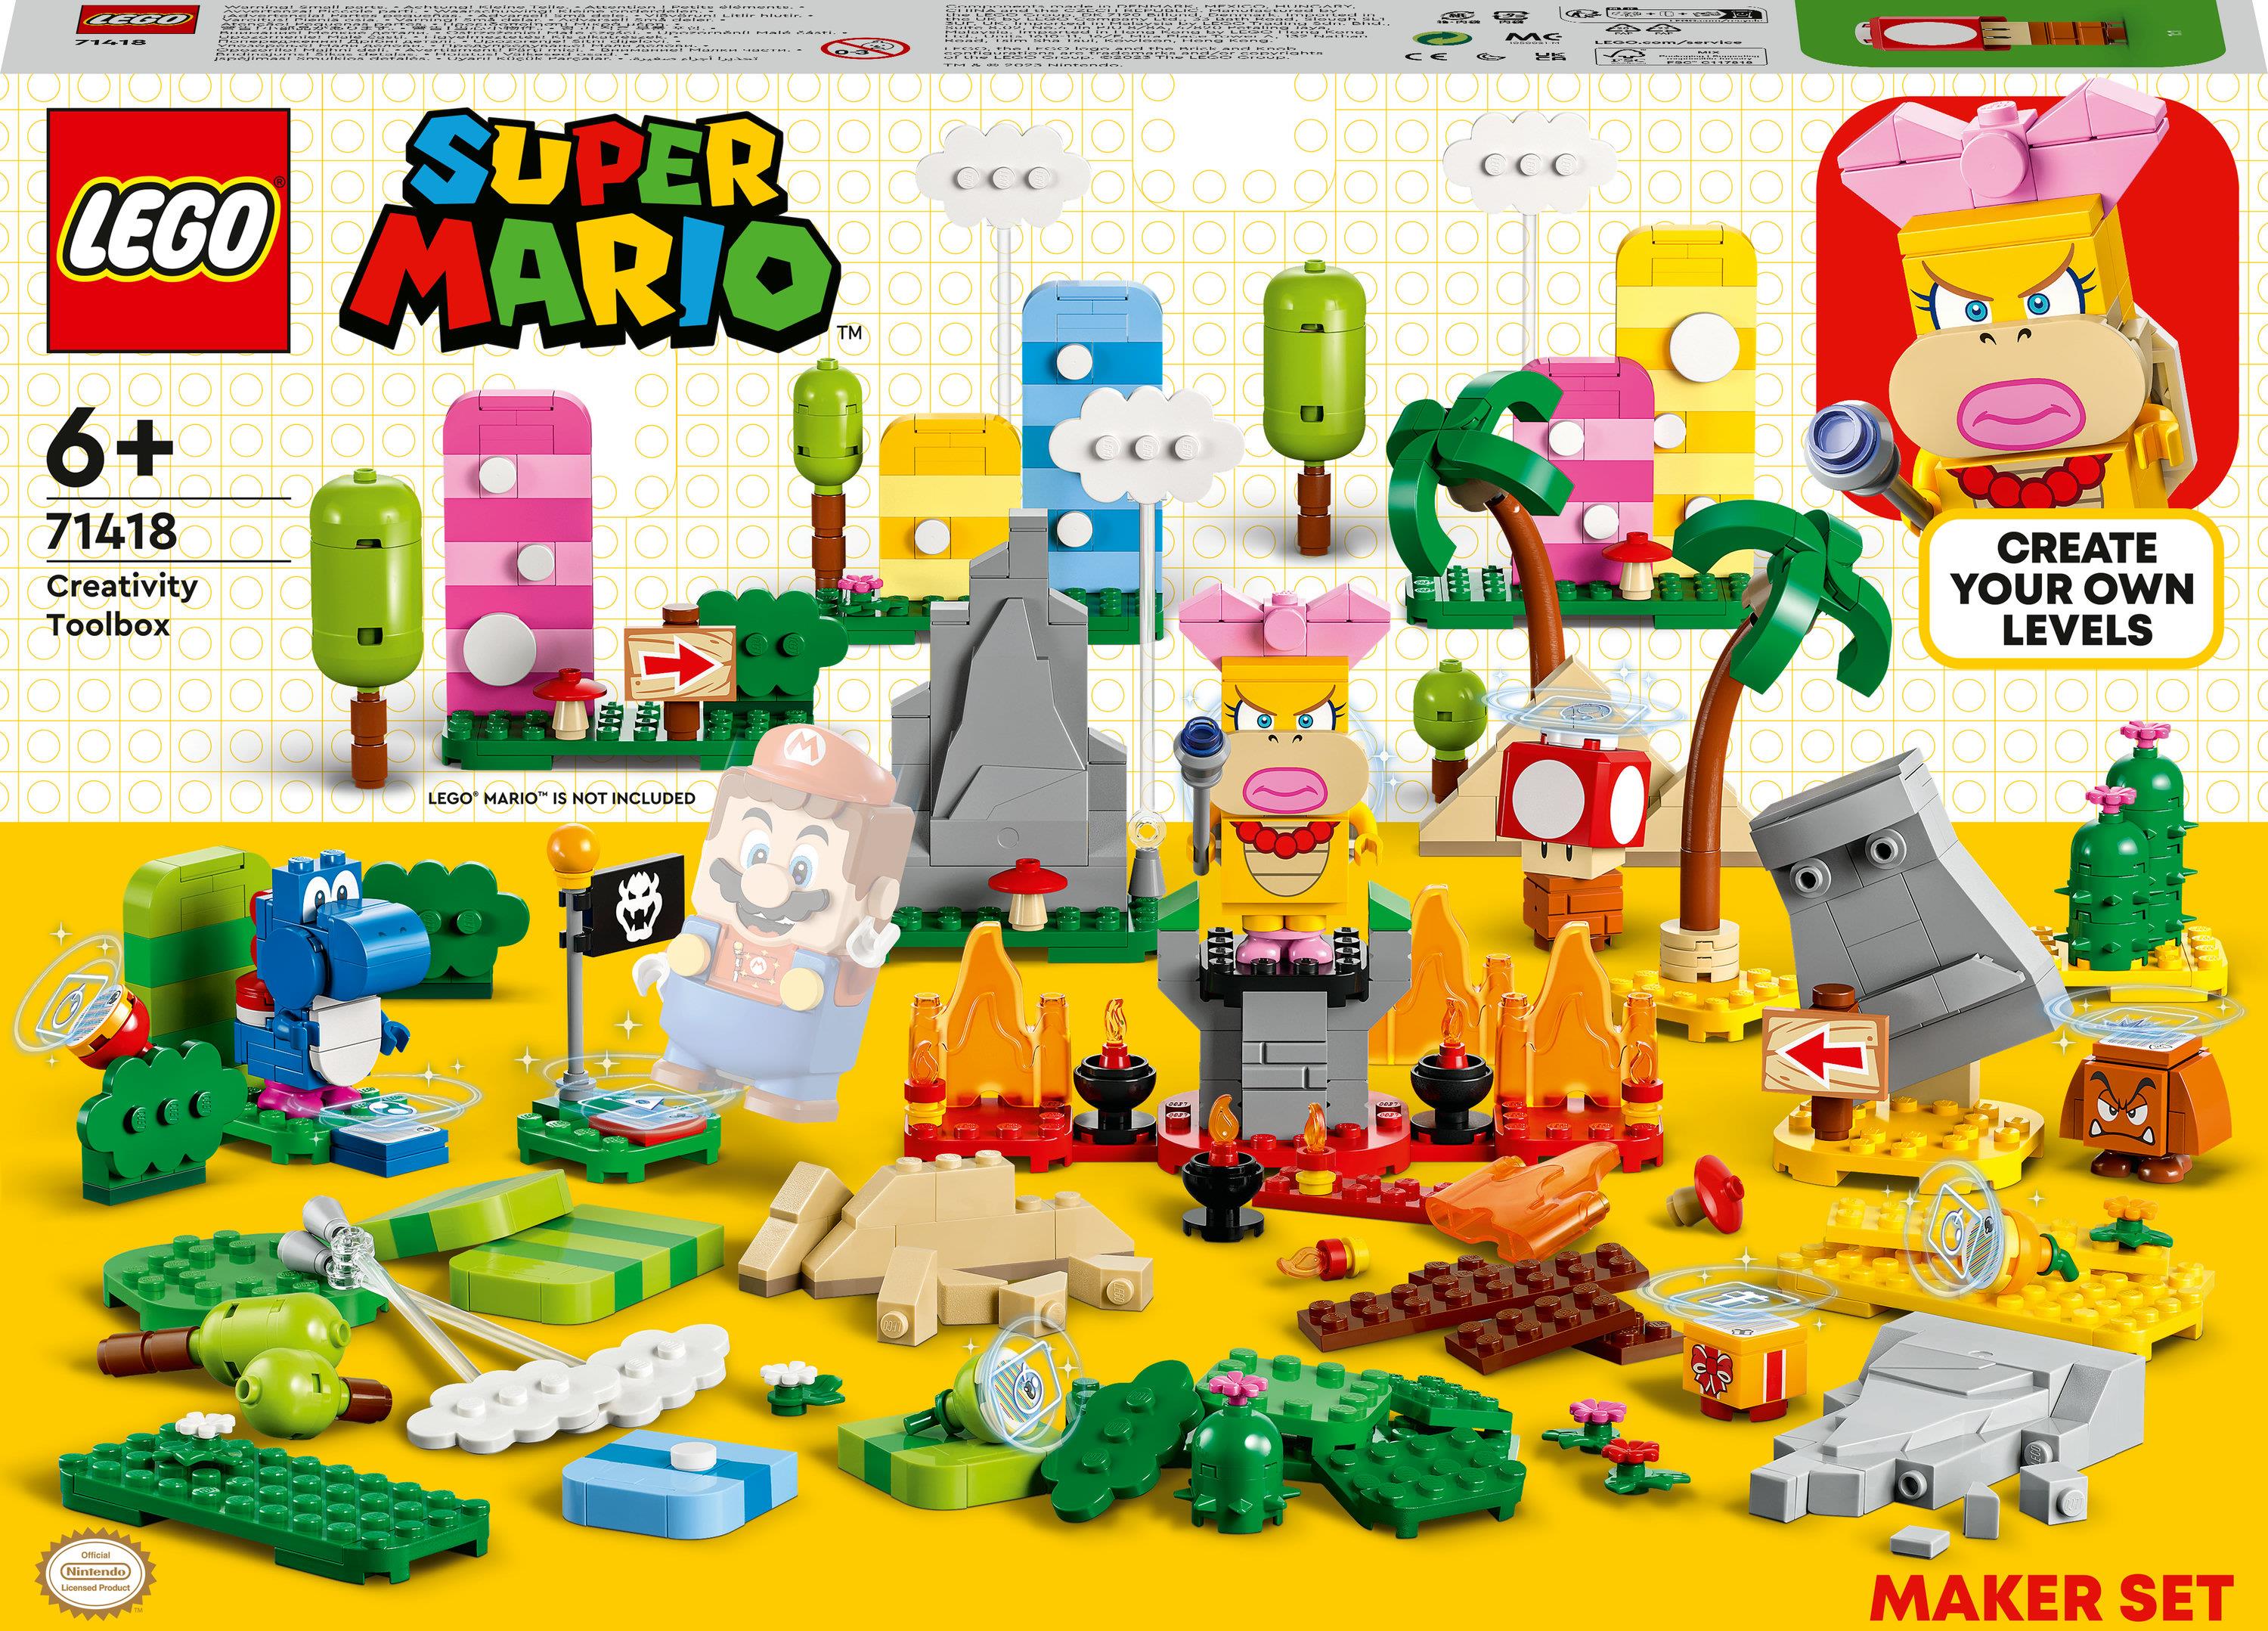 LEGO Super Mario Toolbox